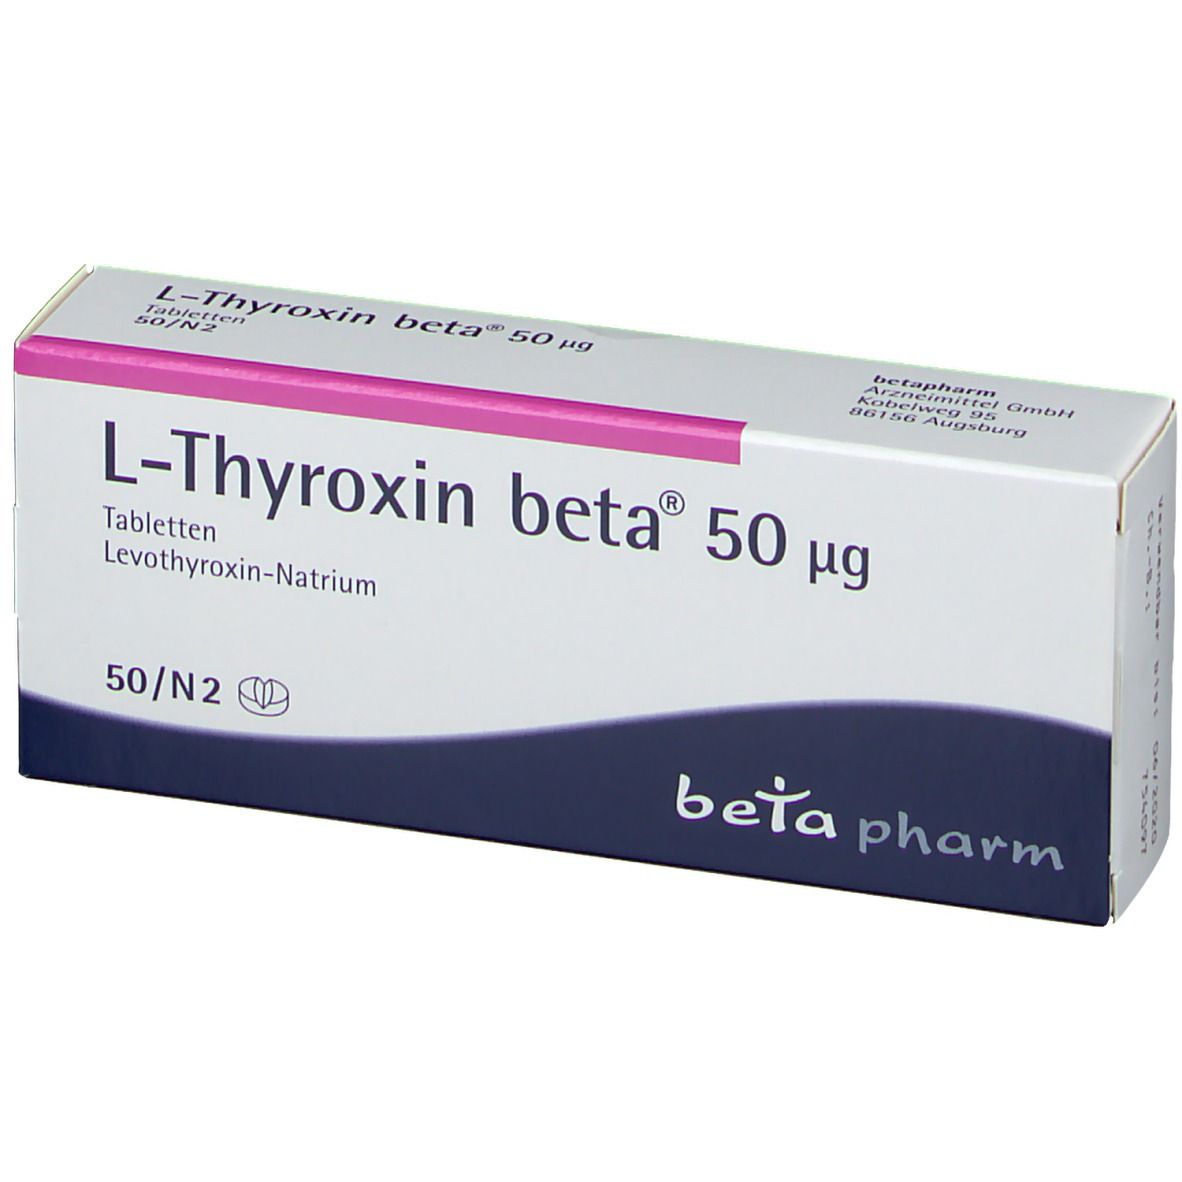 L-Thyroxin beta® 50 ug